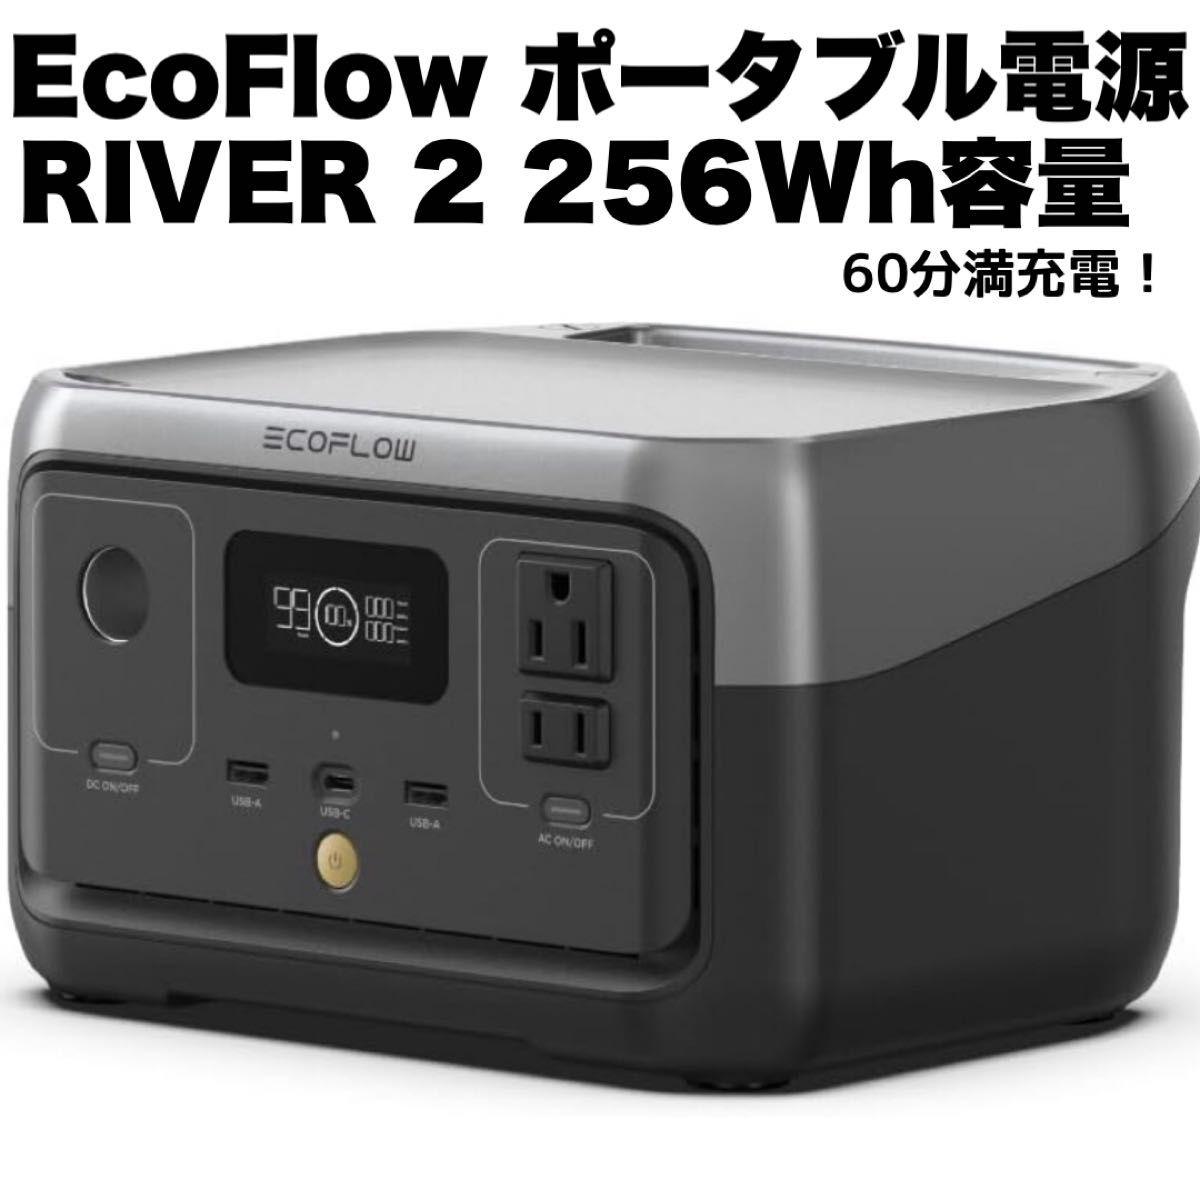 EcoFlow ポータブル電源 RIVER 2 256Wh容量 60分充電 リン酸鉄リチウム